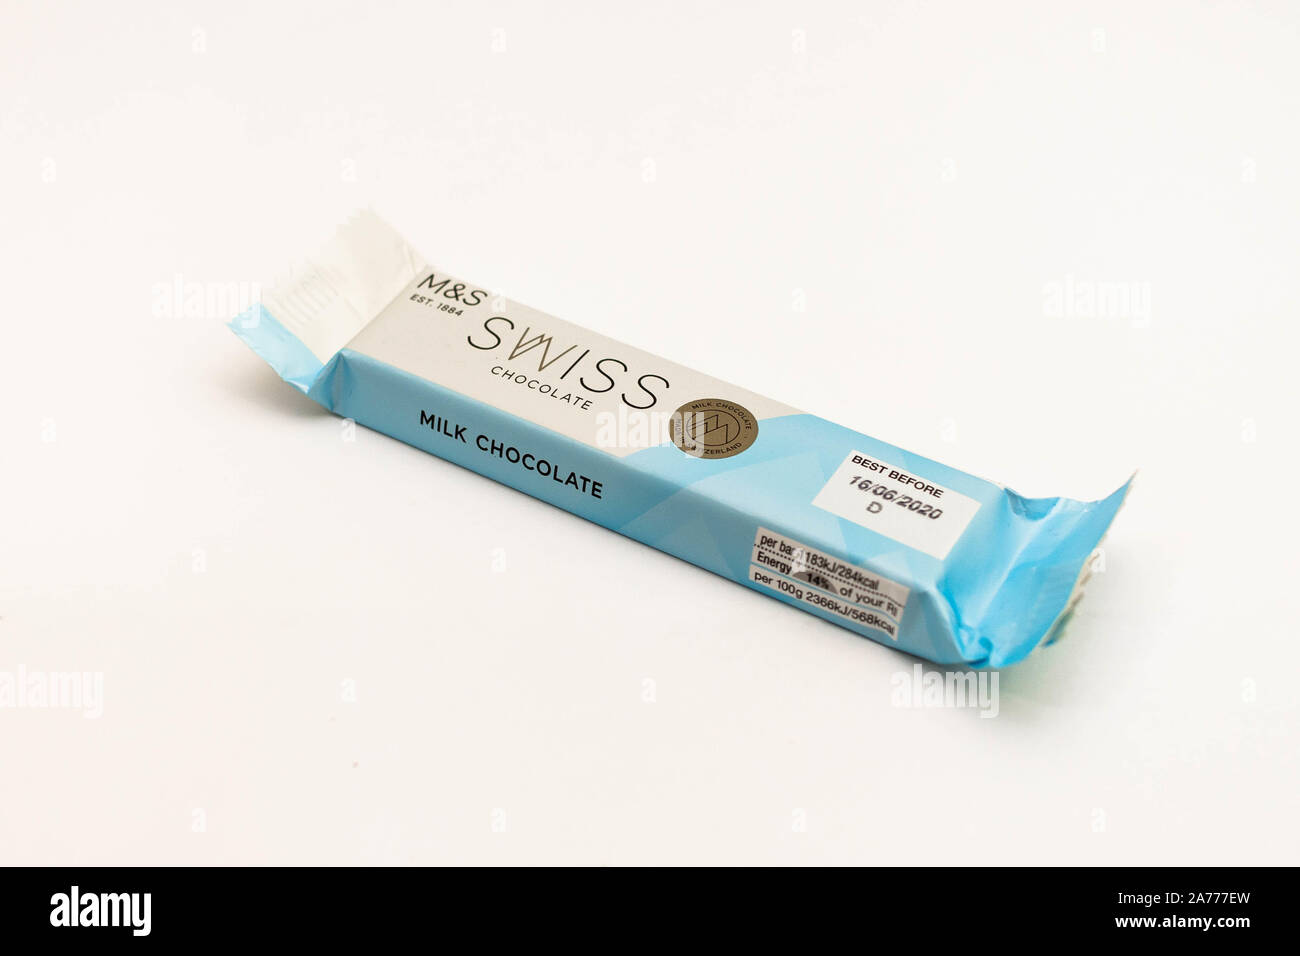 Marks & Spencer Food, The Milk Swiss Chocolate Stock Photo